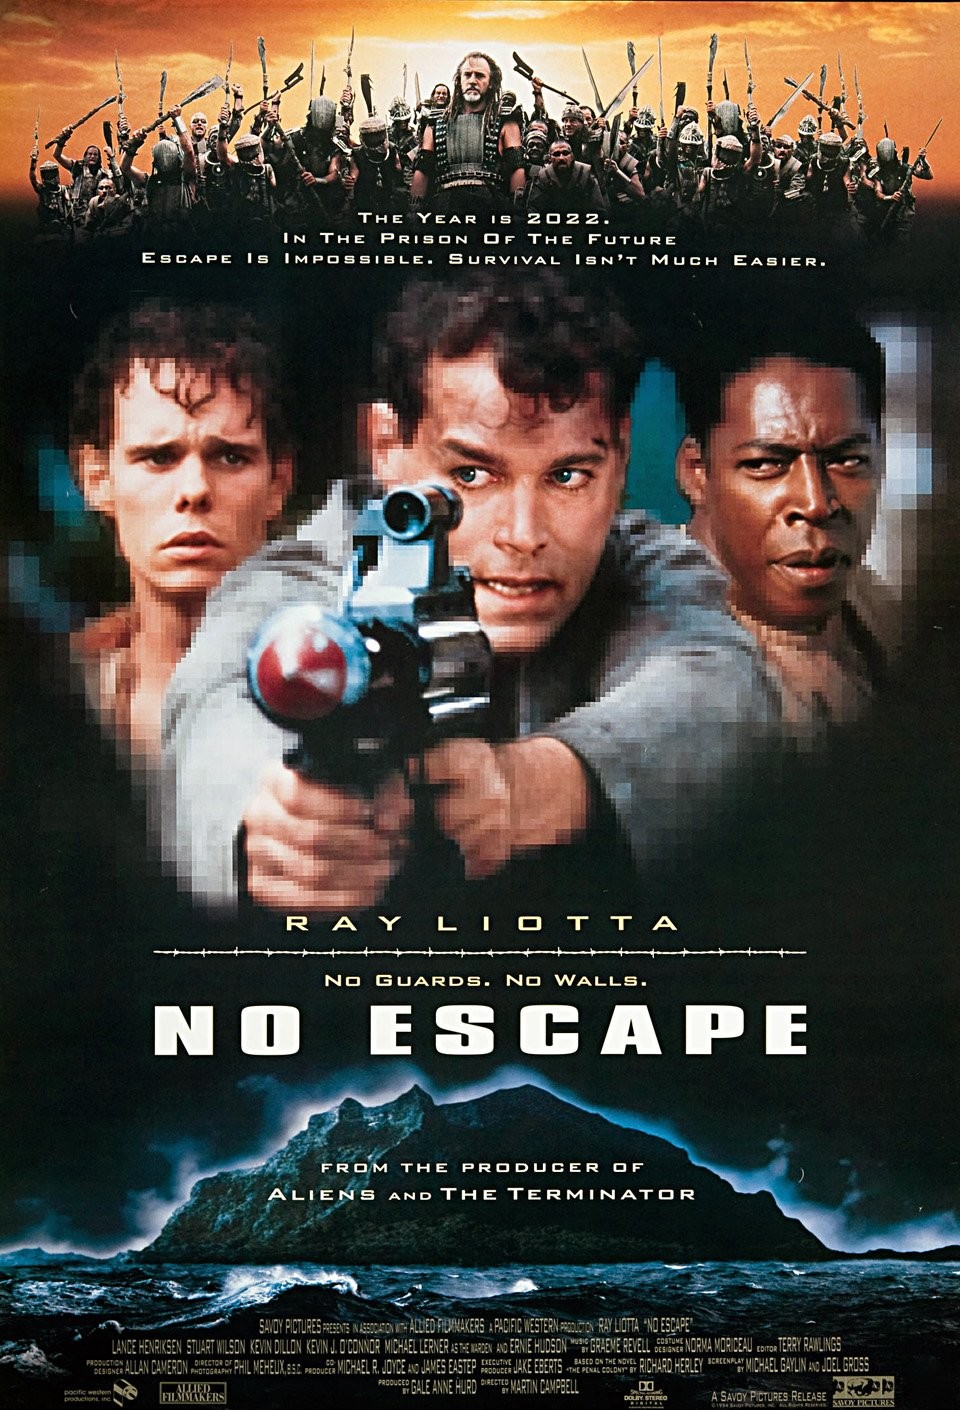 The movie poster for No Escape.